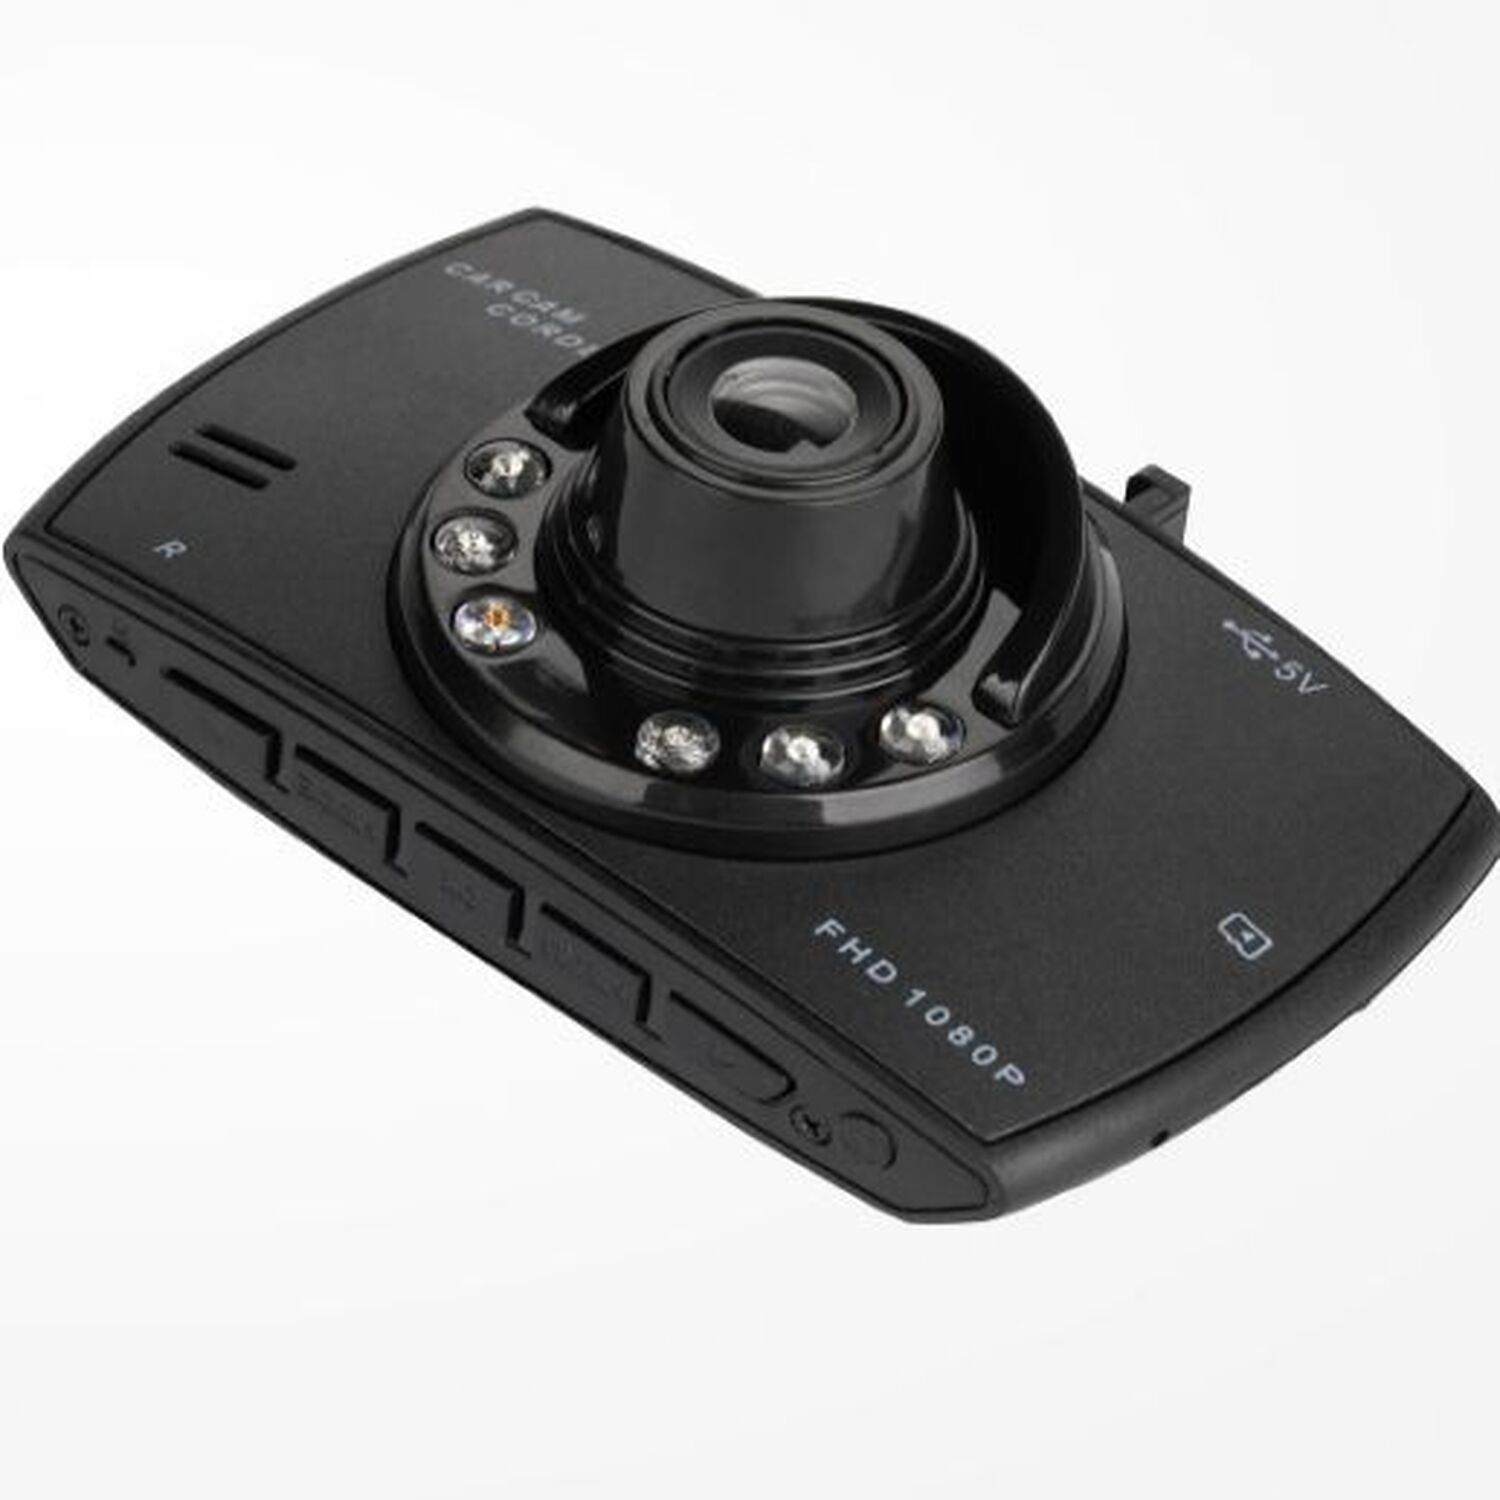 HD Car Dash Camera with SD Card - Black Image 1